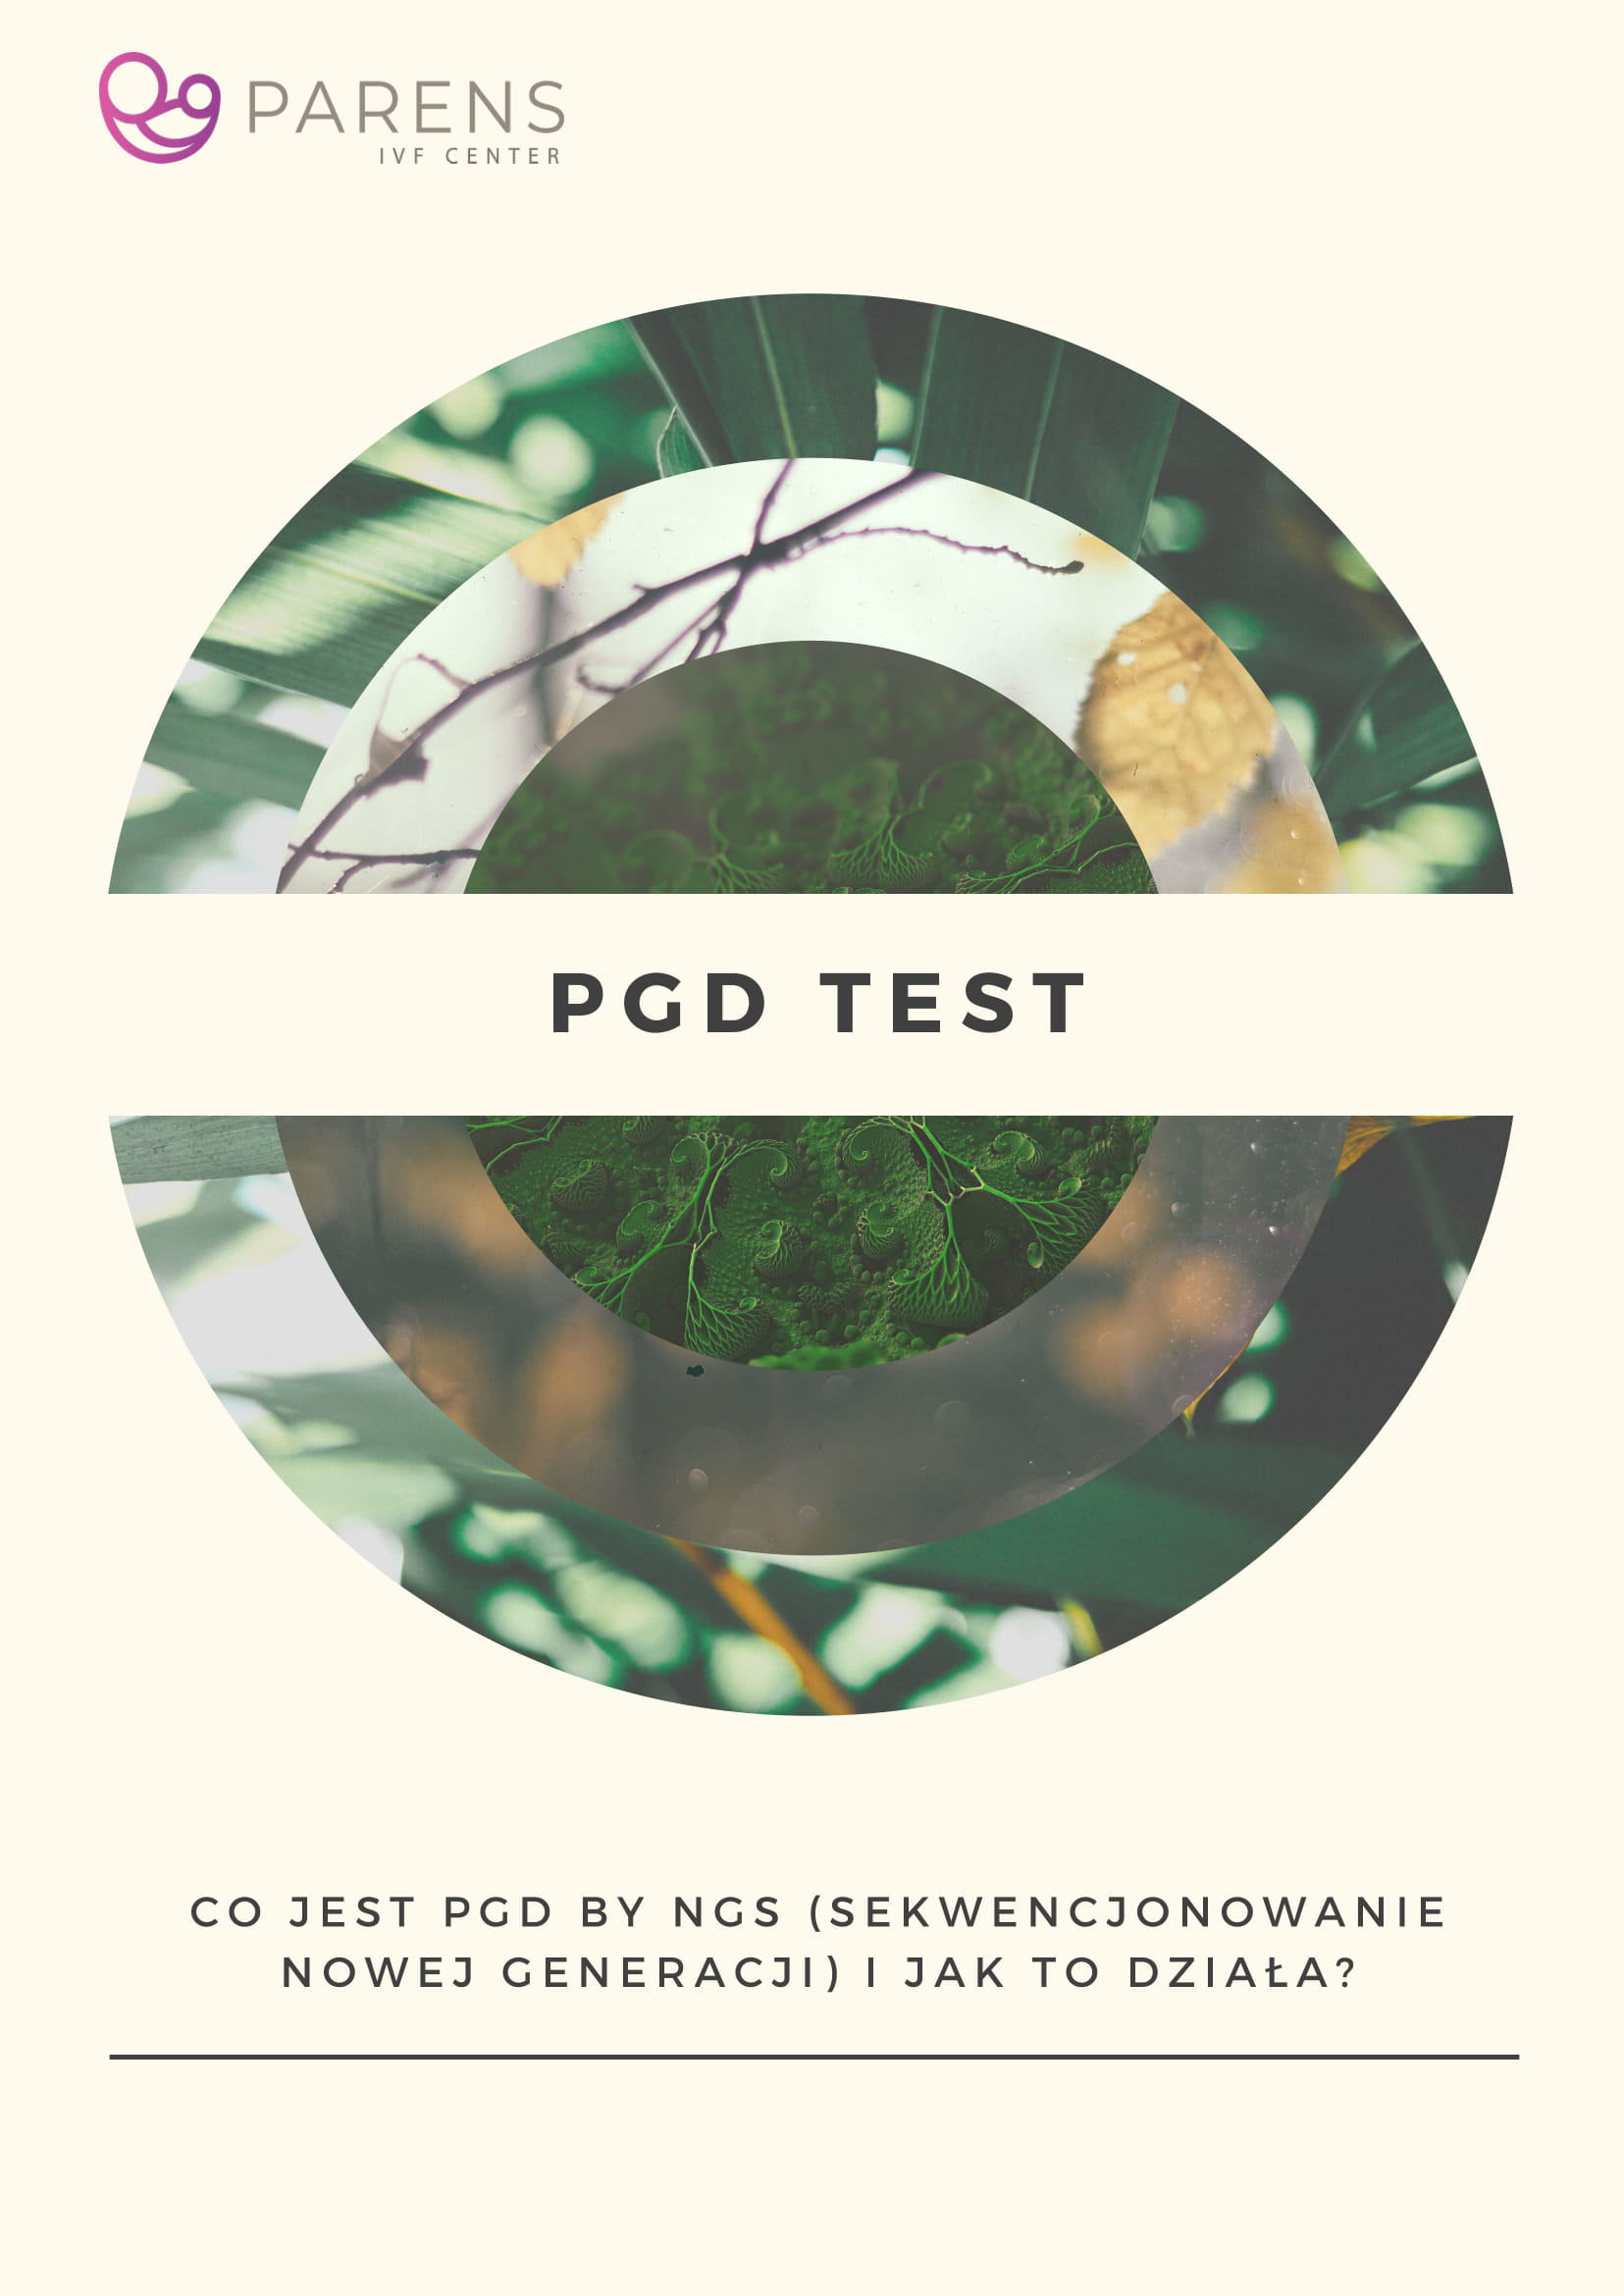 Preimplantation genetic diagnosis (PGD)-PGD test